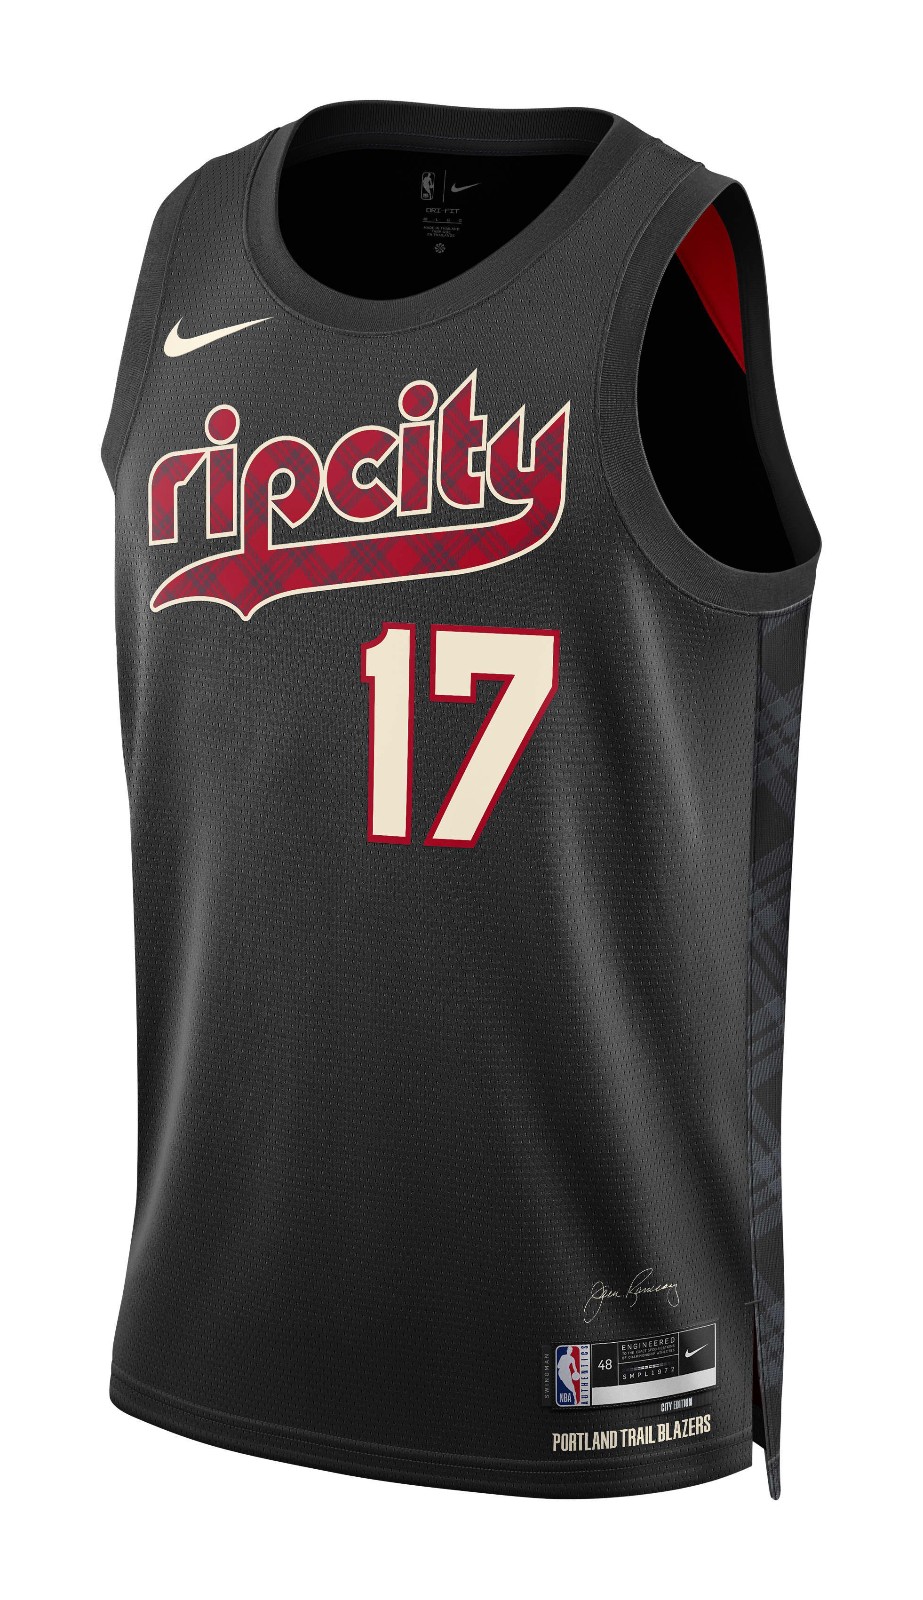 VN Design - Portland Trail Blazers #RipCityPride alternate jersey